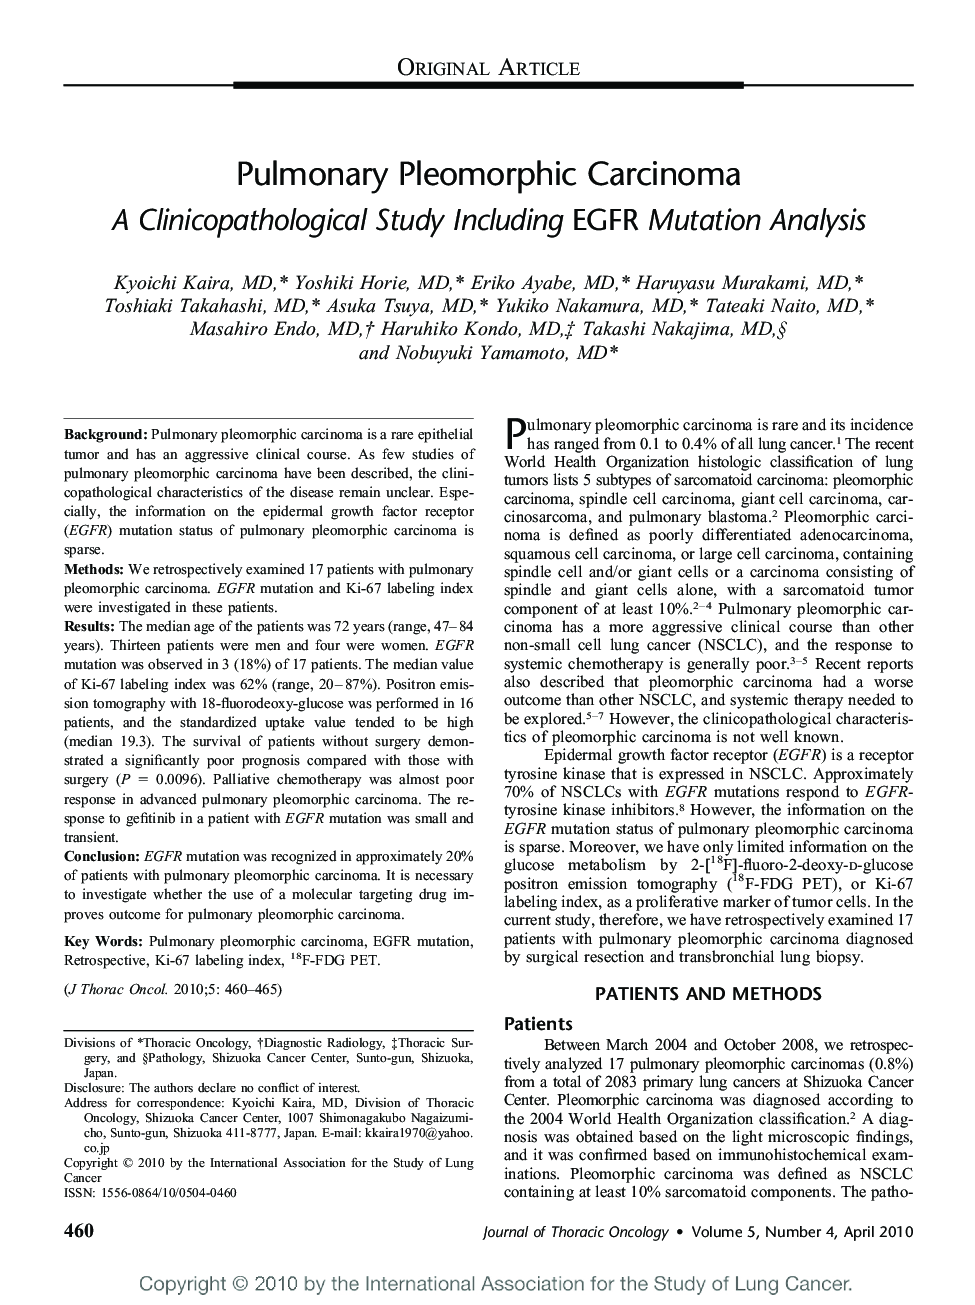 Pulmonary Pleomorphic Carcinoma: A Clinicopathological Study Including EGFR Mutation Analysis 